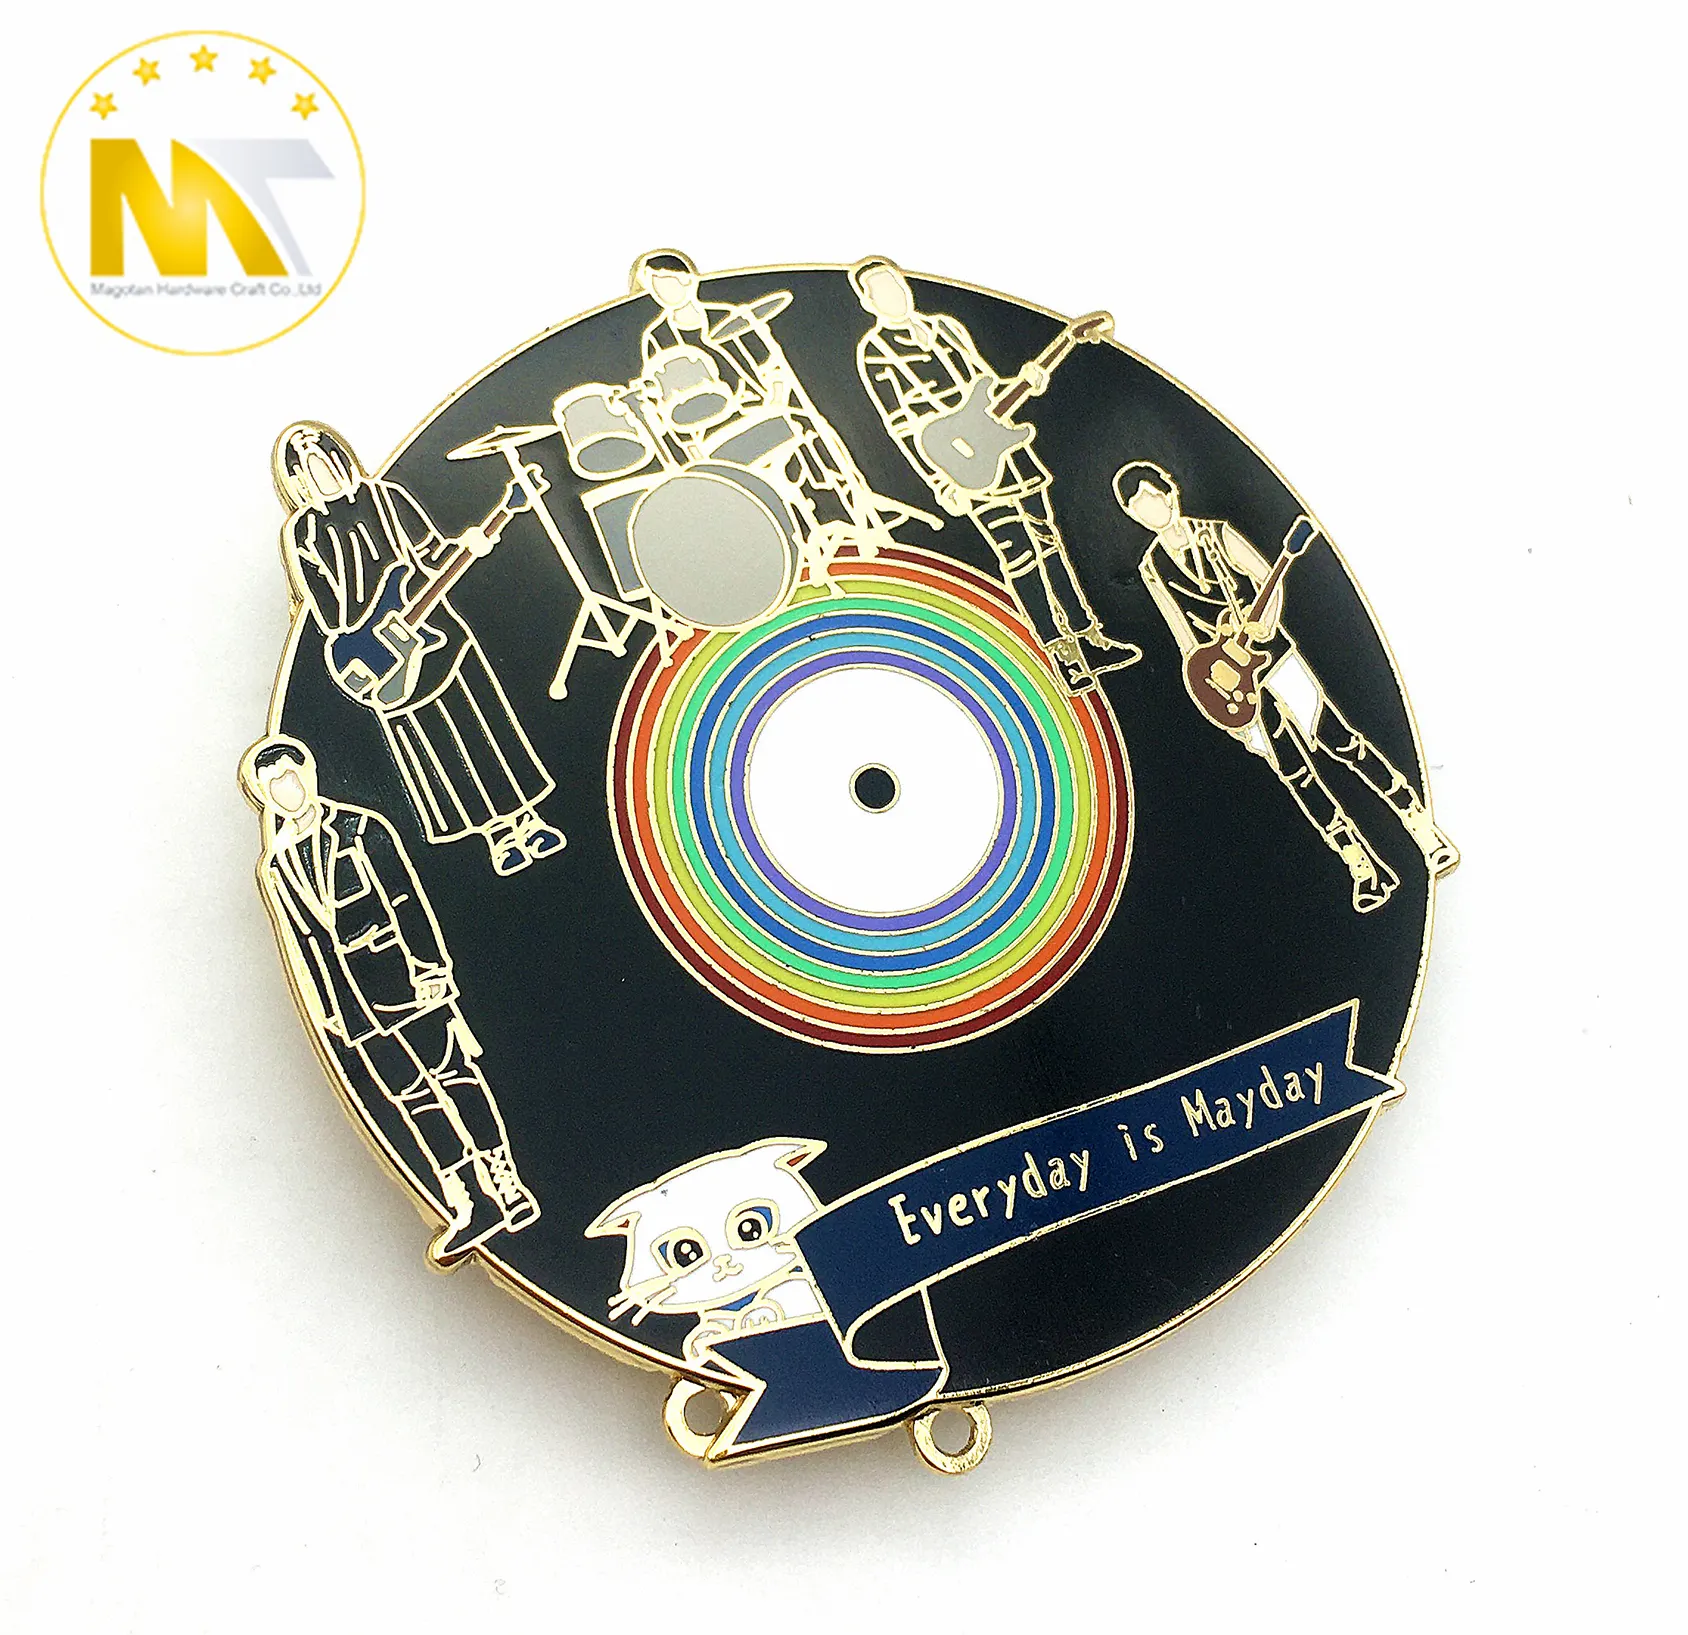 Hot selling customized band design hard enamel metal zinc alloy characters badge pin